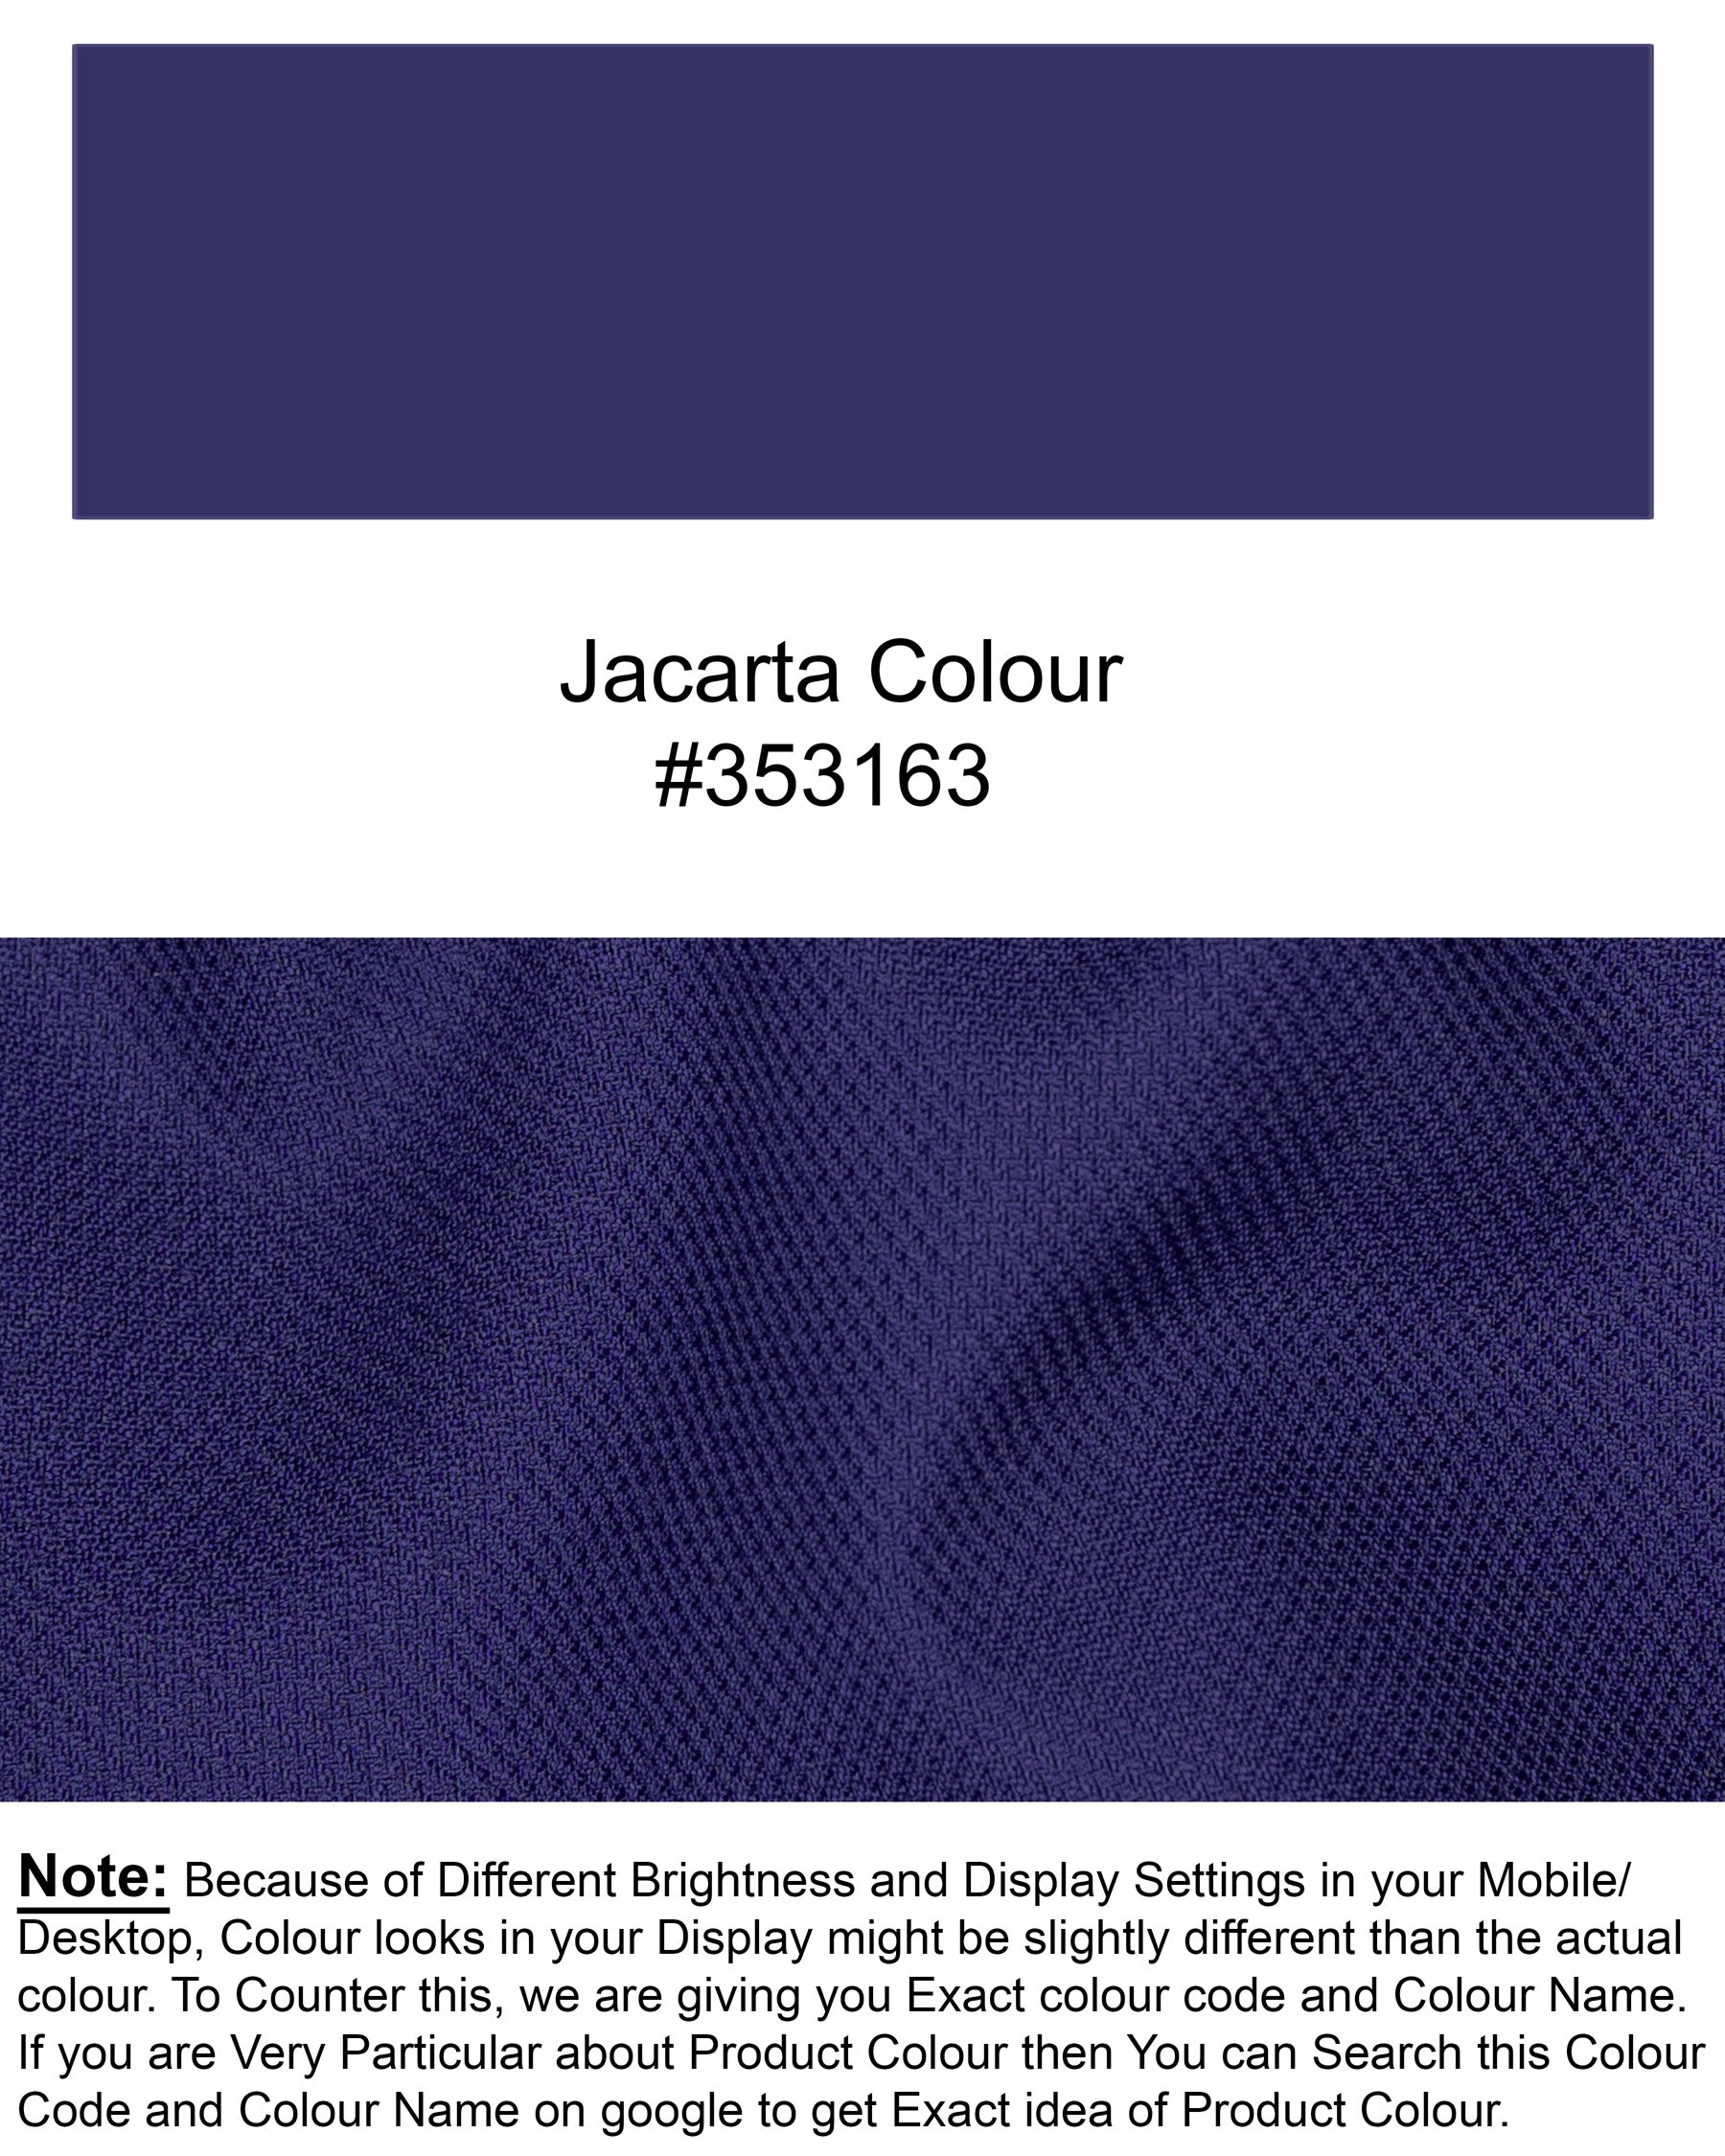 Jacarta Blue Cross Buttoned Wool Rich Bandhgala Blazer BL1439-CBG2-36,BL1439-CBG2-38,BL1439-CBG2-40,BL1439-CBG2-42,BL1439-CBG2-44,BL1439-CBG2-46,BL1439-CBG2-48,BL1439-CBG2-50,BL1439-CBG2-52,BL1439-CBG2-54,BL1439-CBG2-56,BL1439-CBG2-58,BL1439-CBG2-60